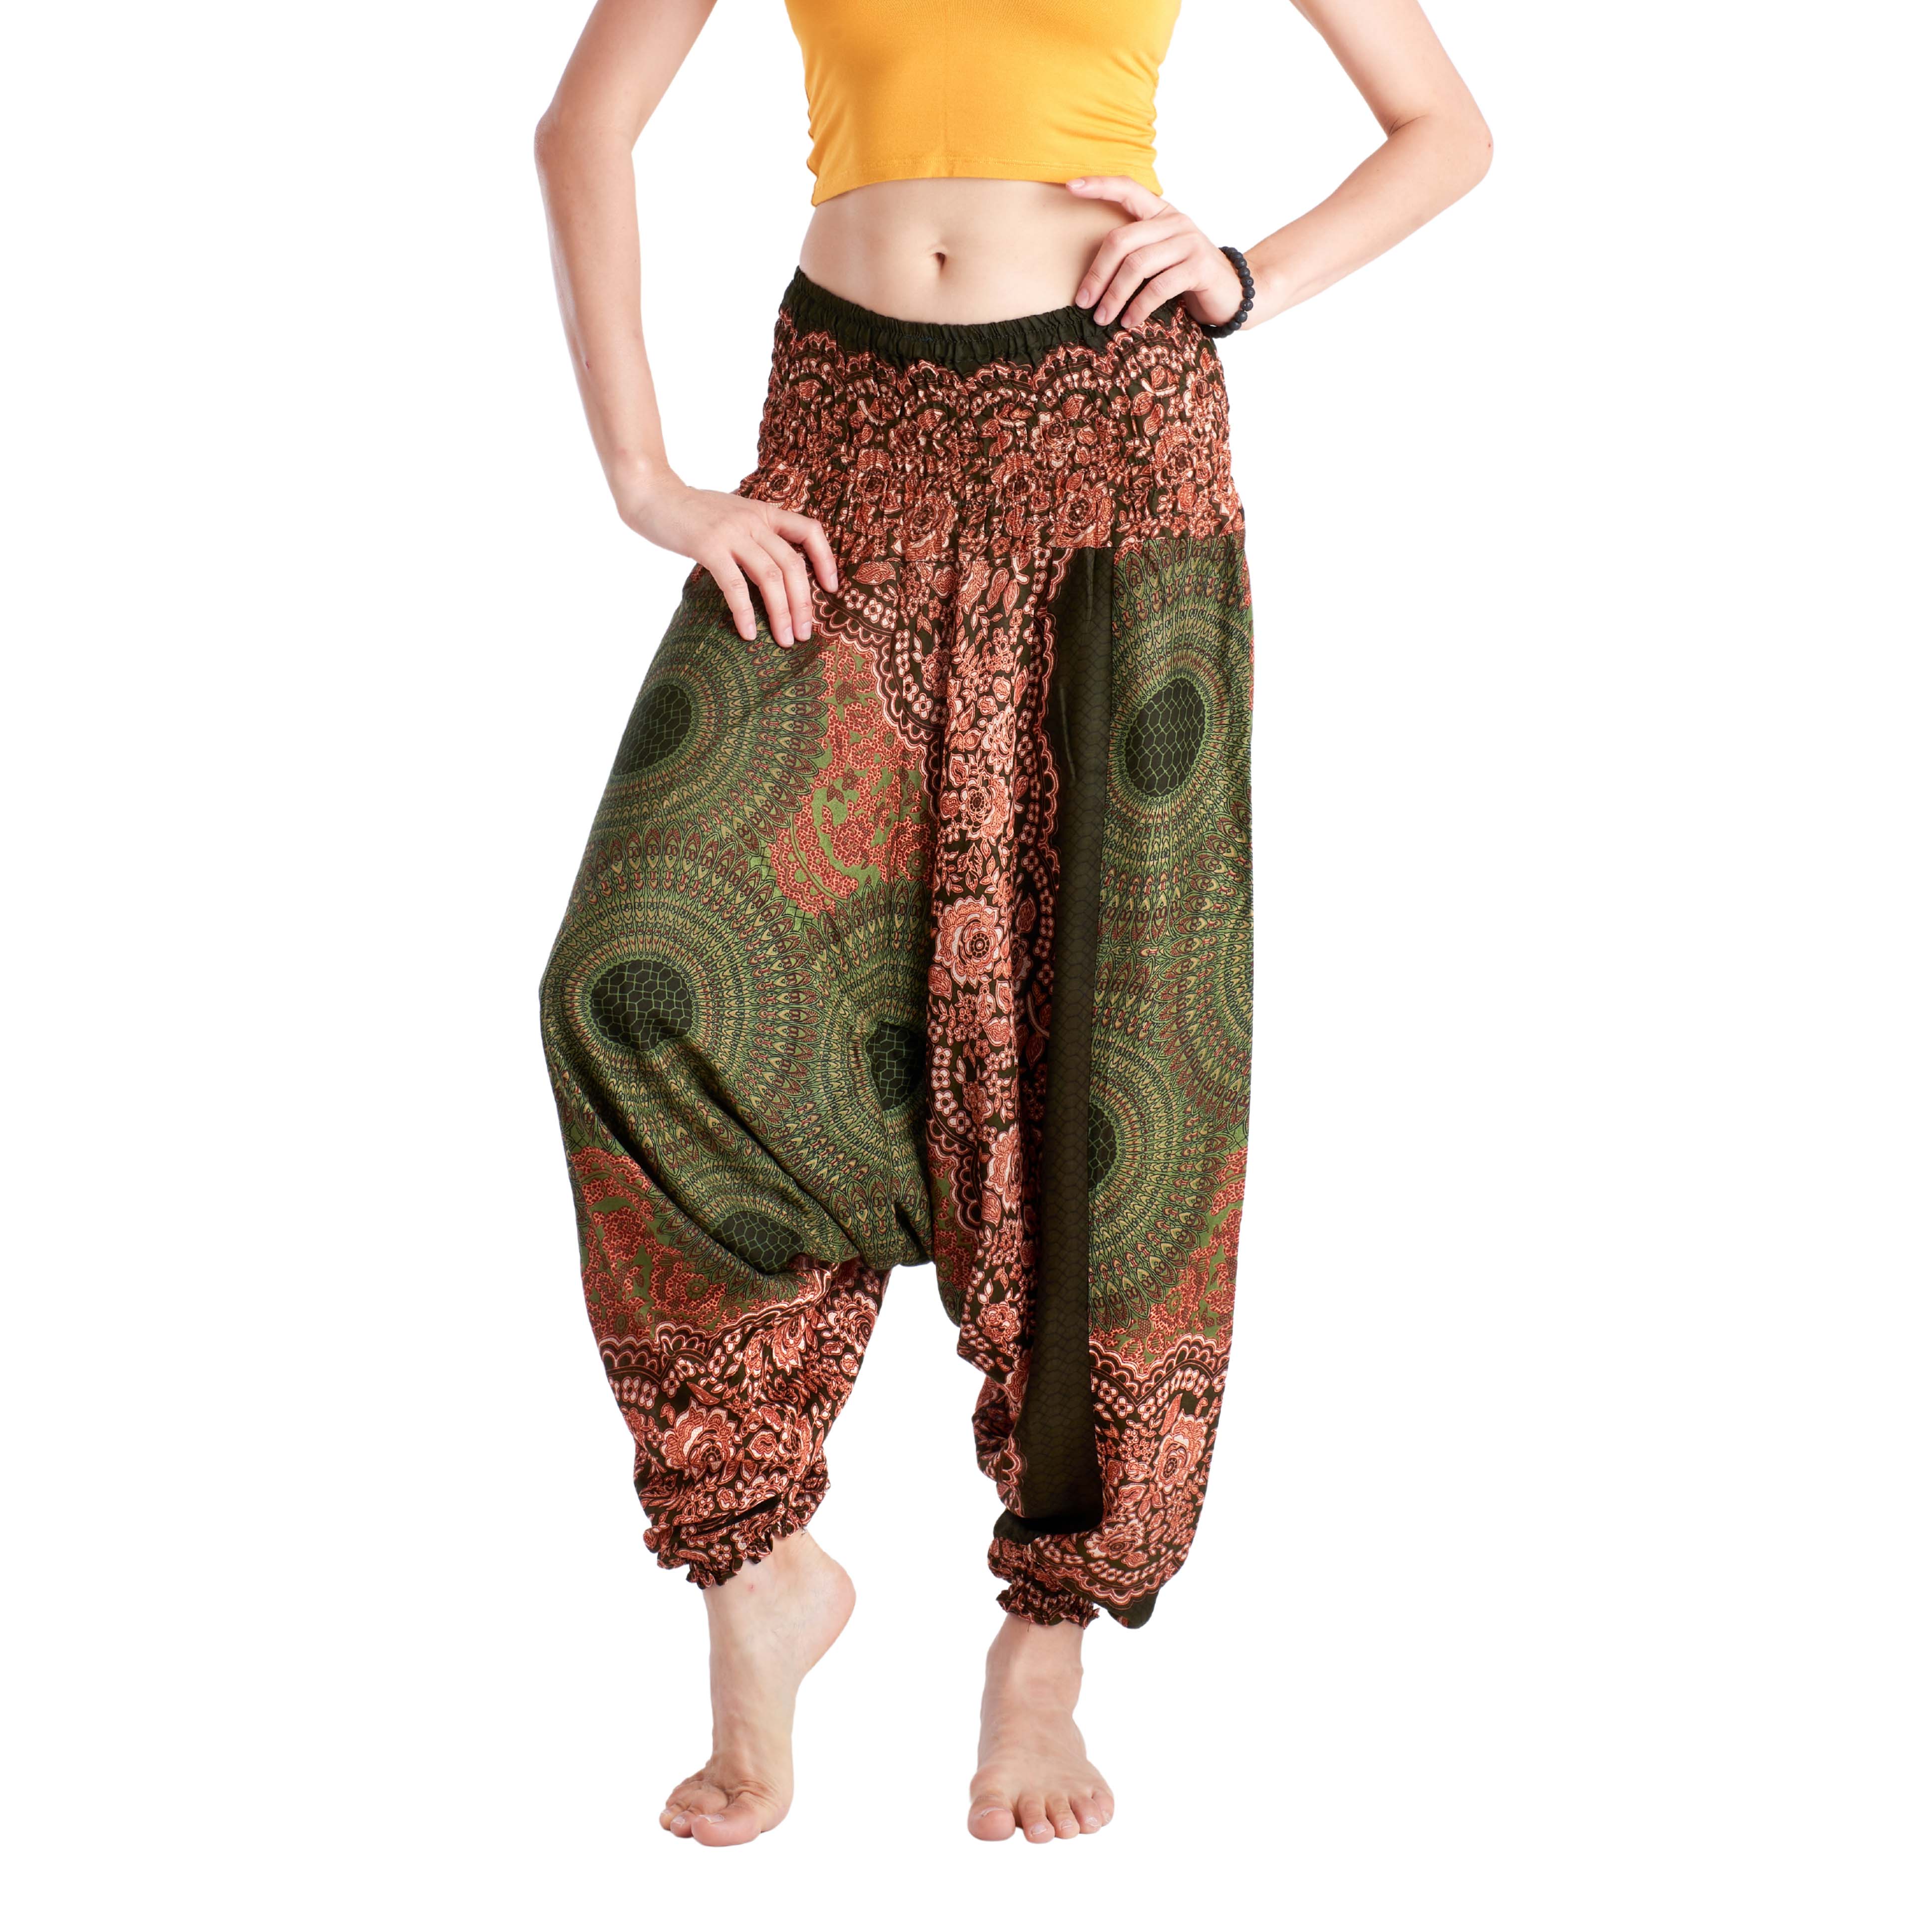 BINTAN YOGA PANTS Elepanta Aladdin Pants - Buy Today Elephant Pants Jewelry And Bohemian Clothes Handmade In Thailand Help To Save The Elephants FairTrade And Vegan